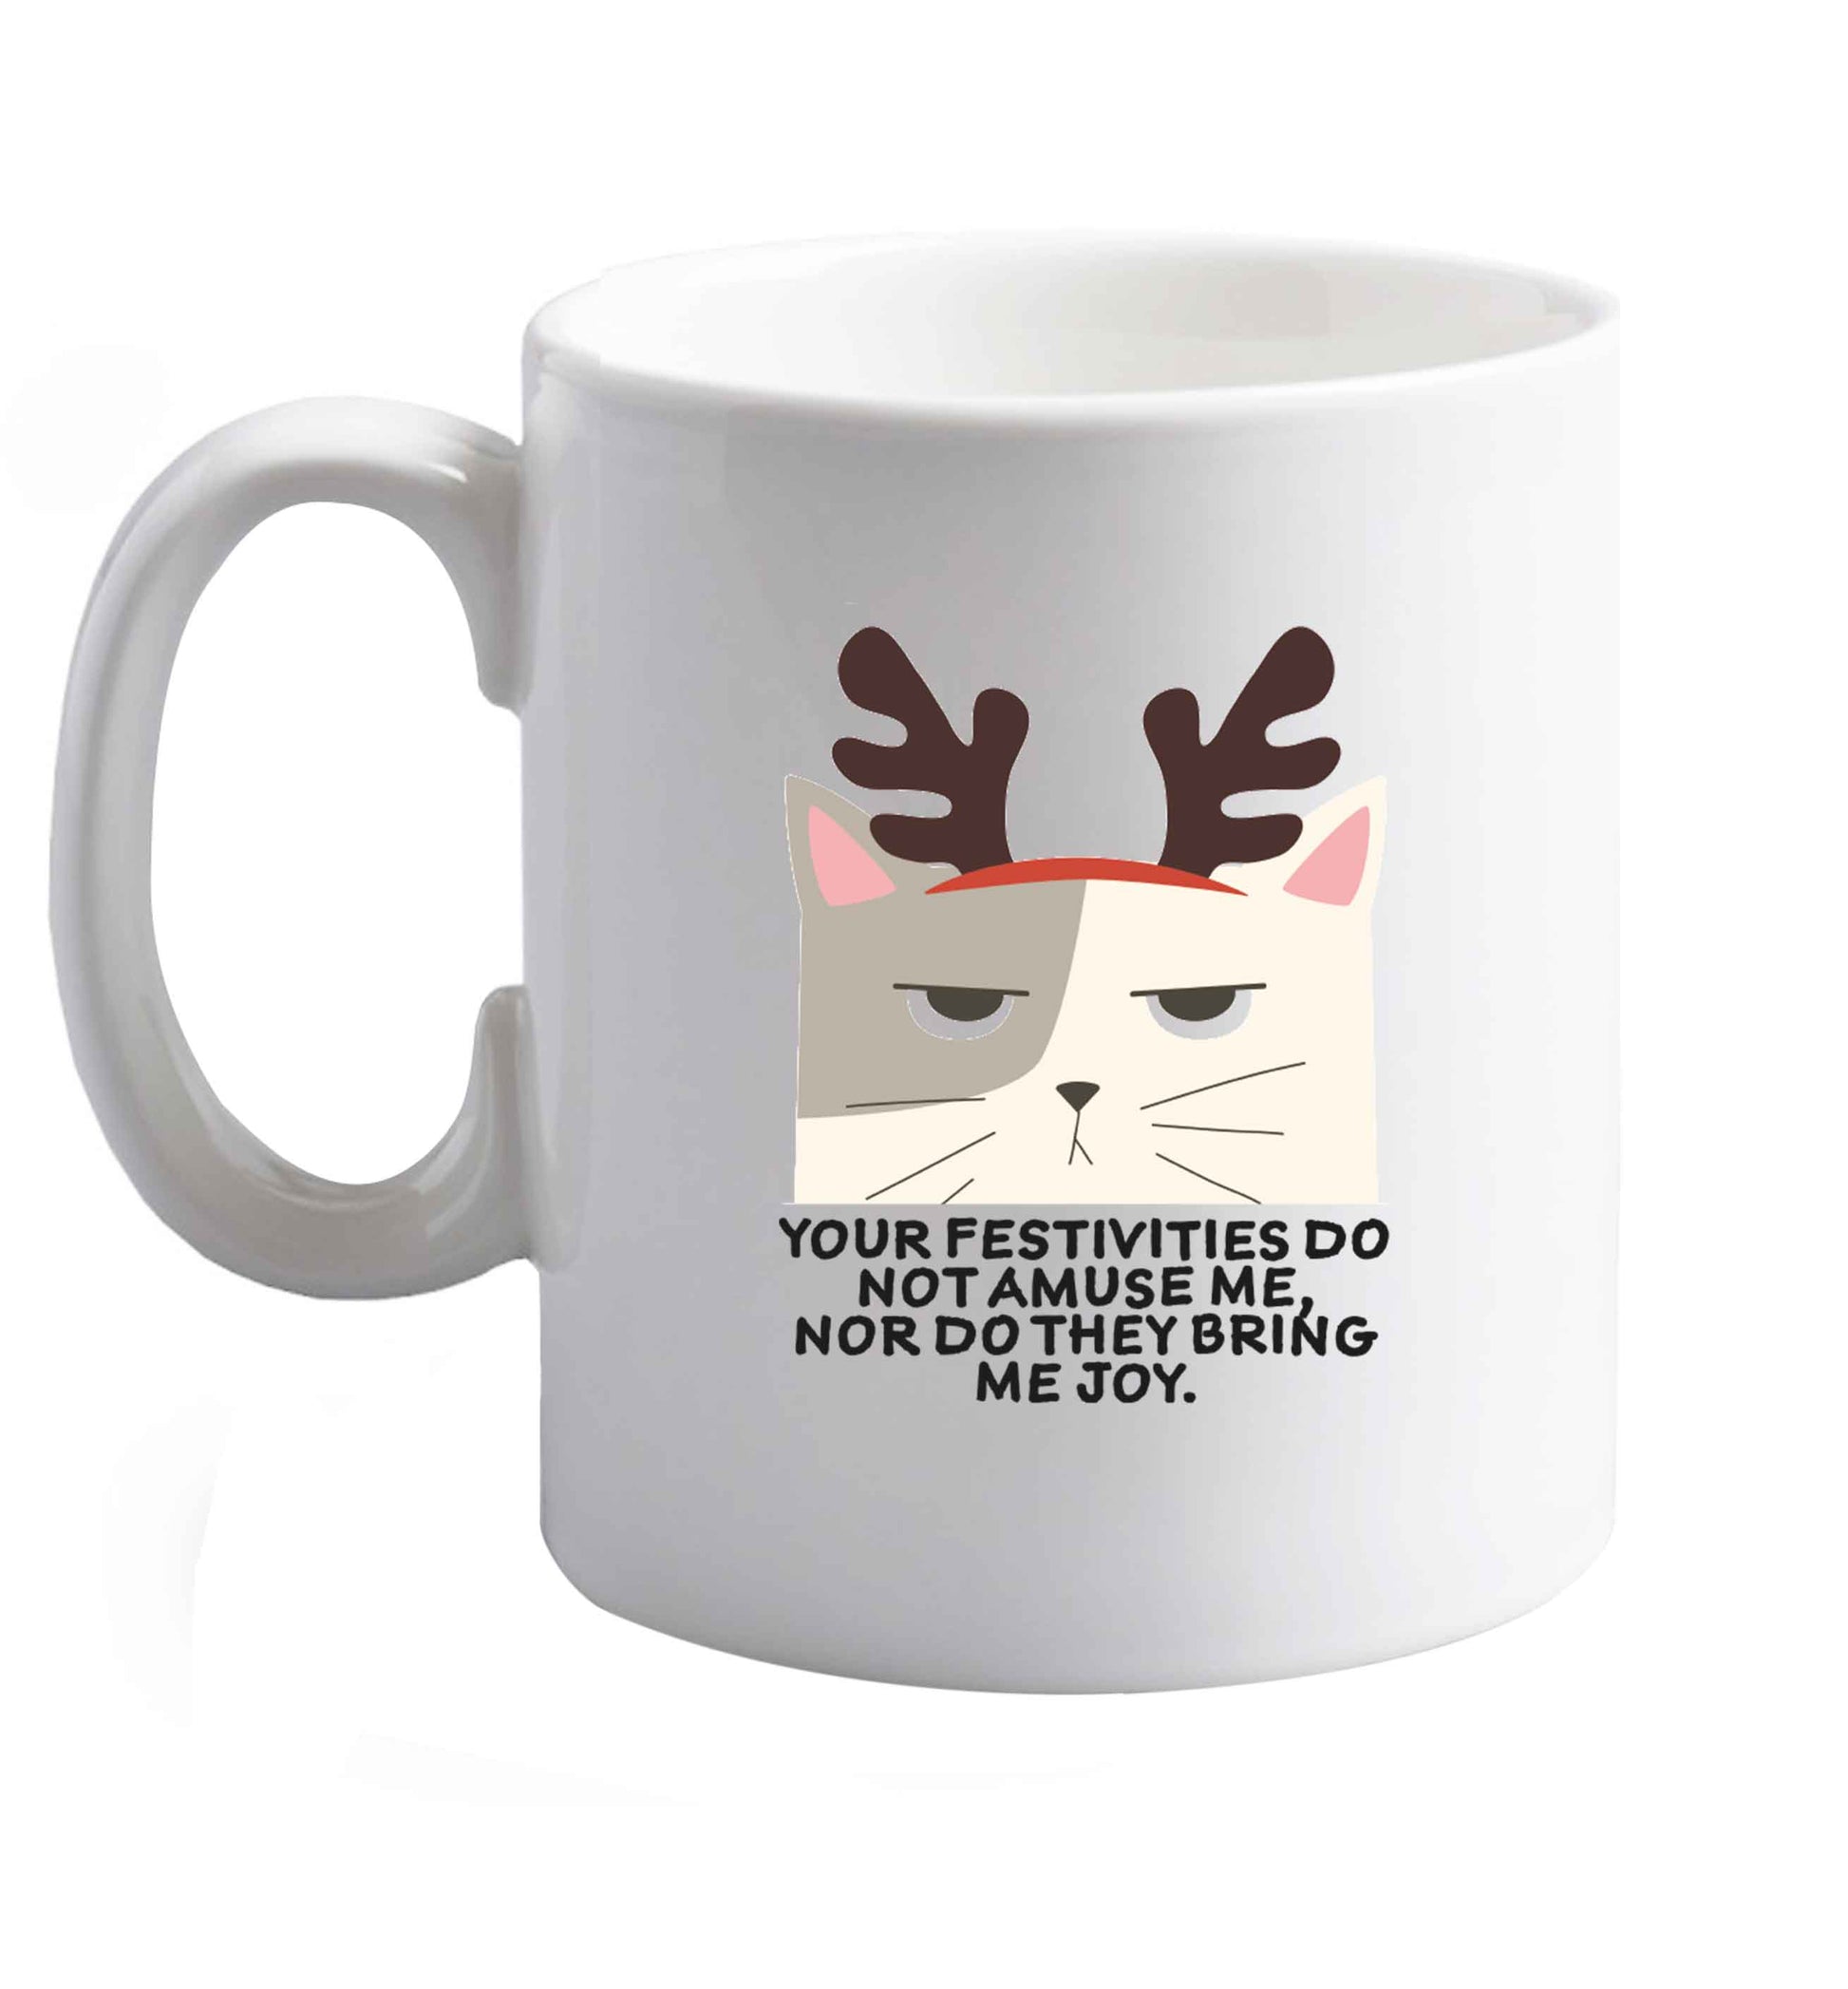 10 oz Your festivities do not amuse me nor do they bring me joy ceramic mug right handed